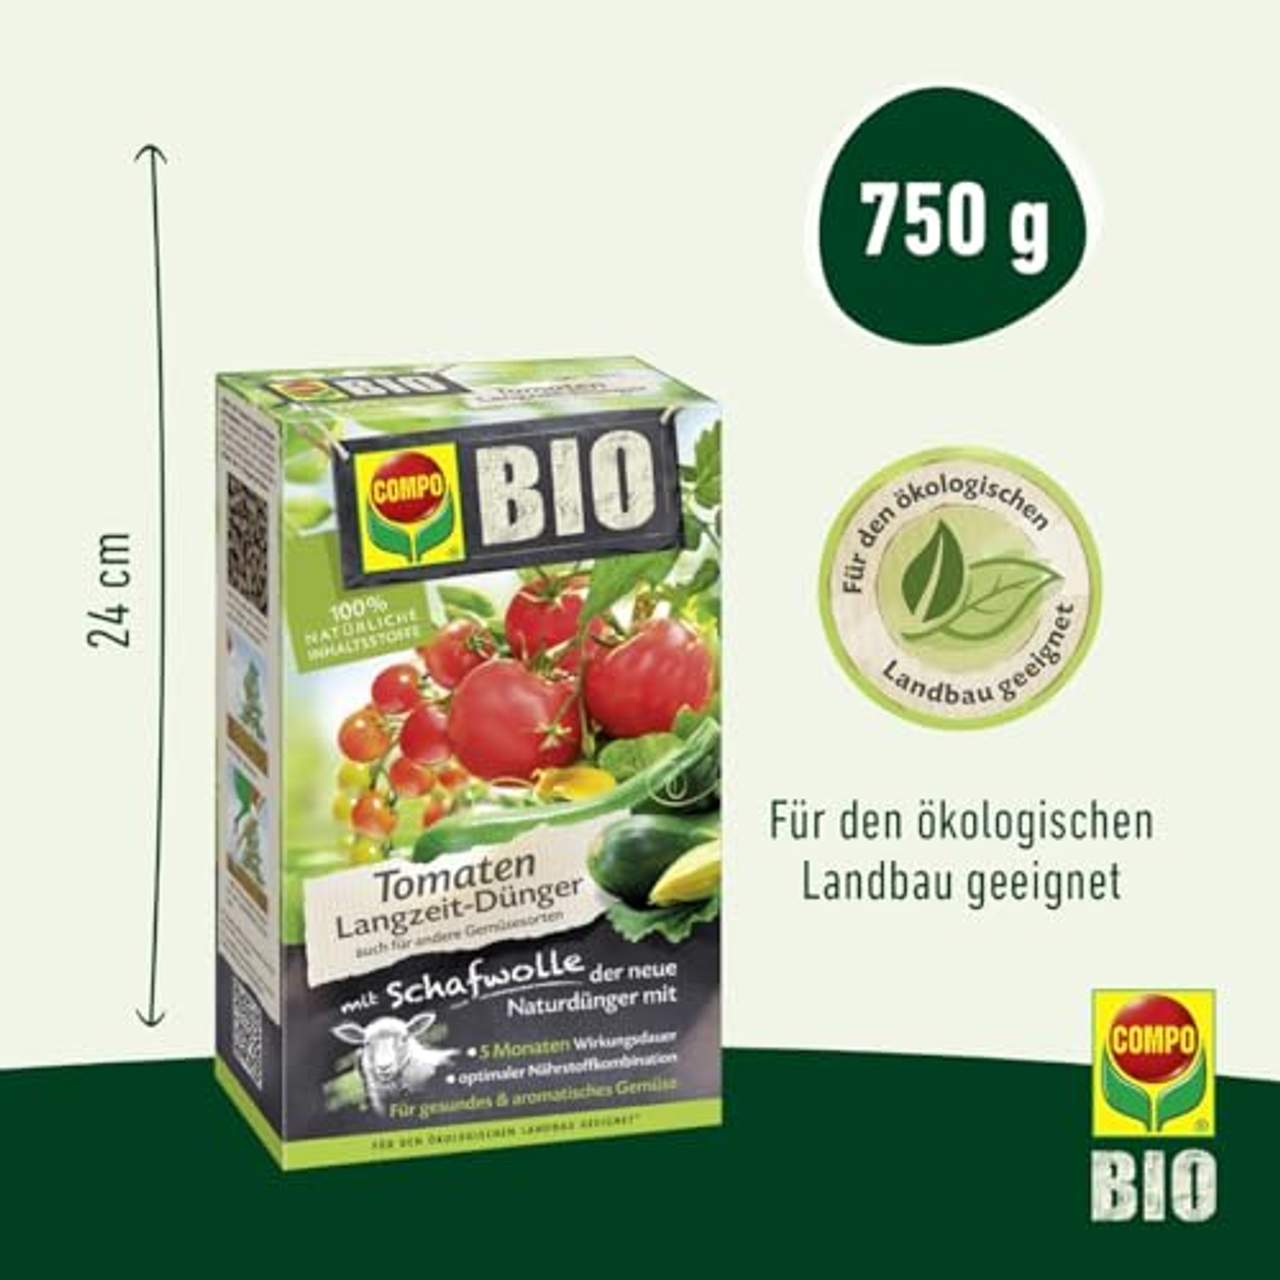 Compo BIO Tomaten Langzeit-Dünger